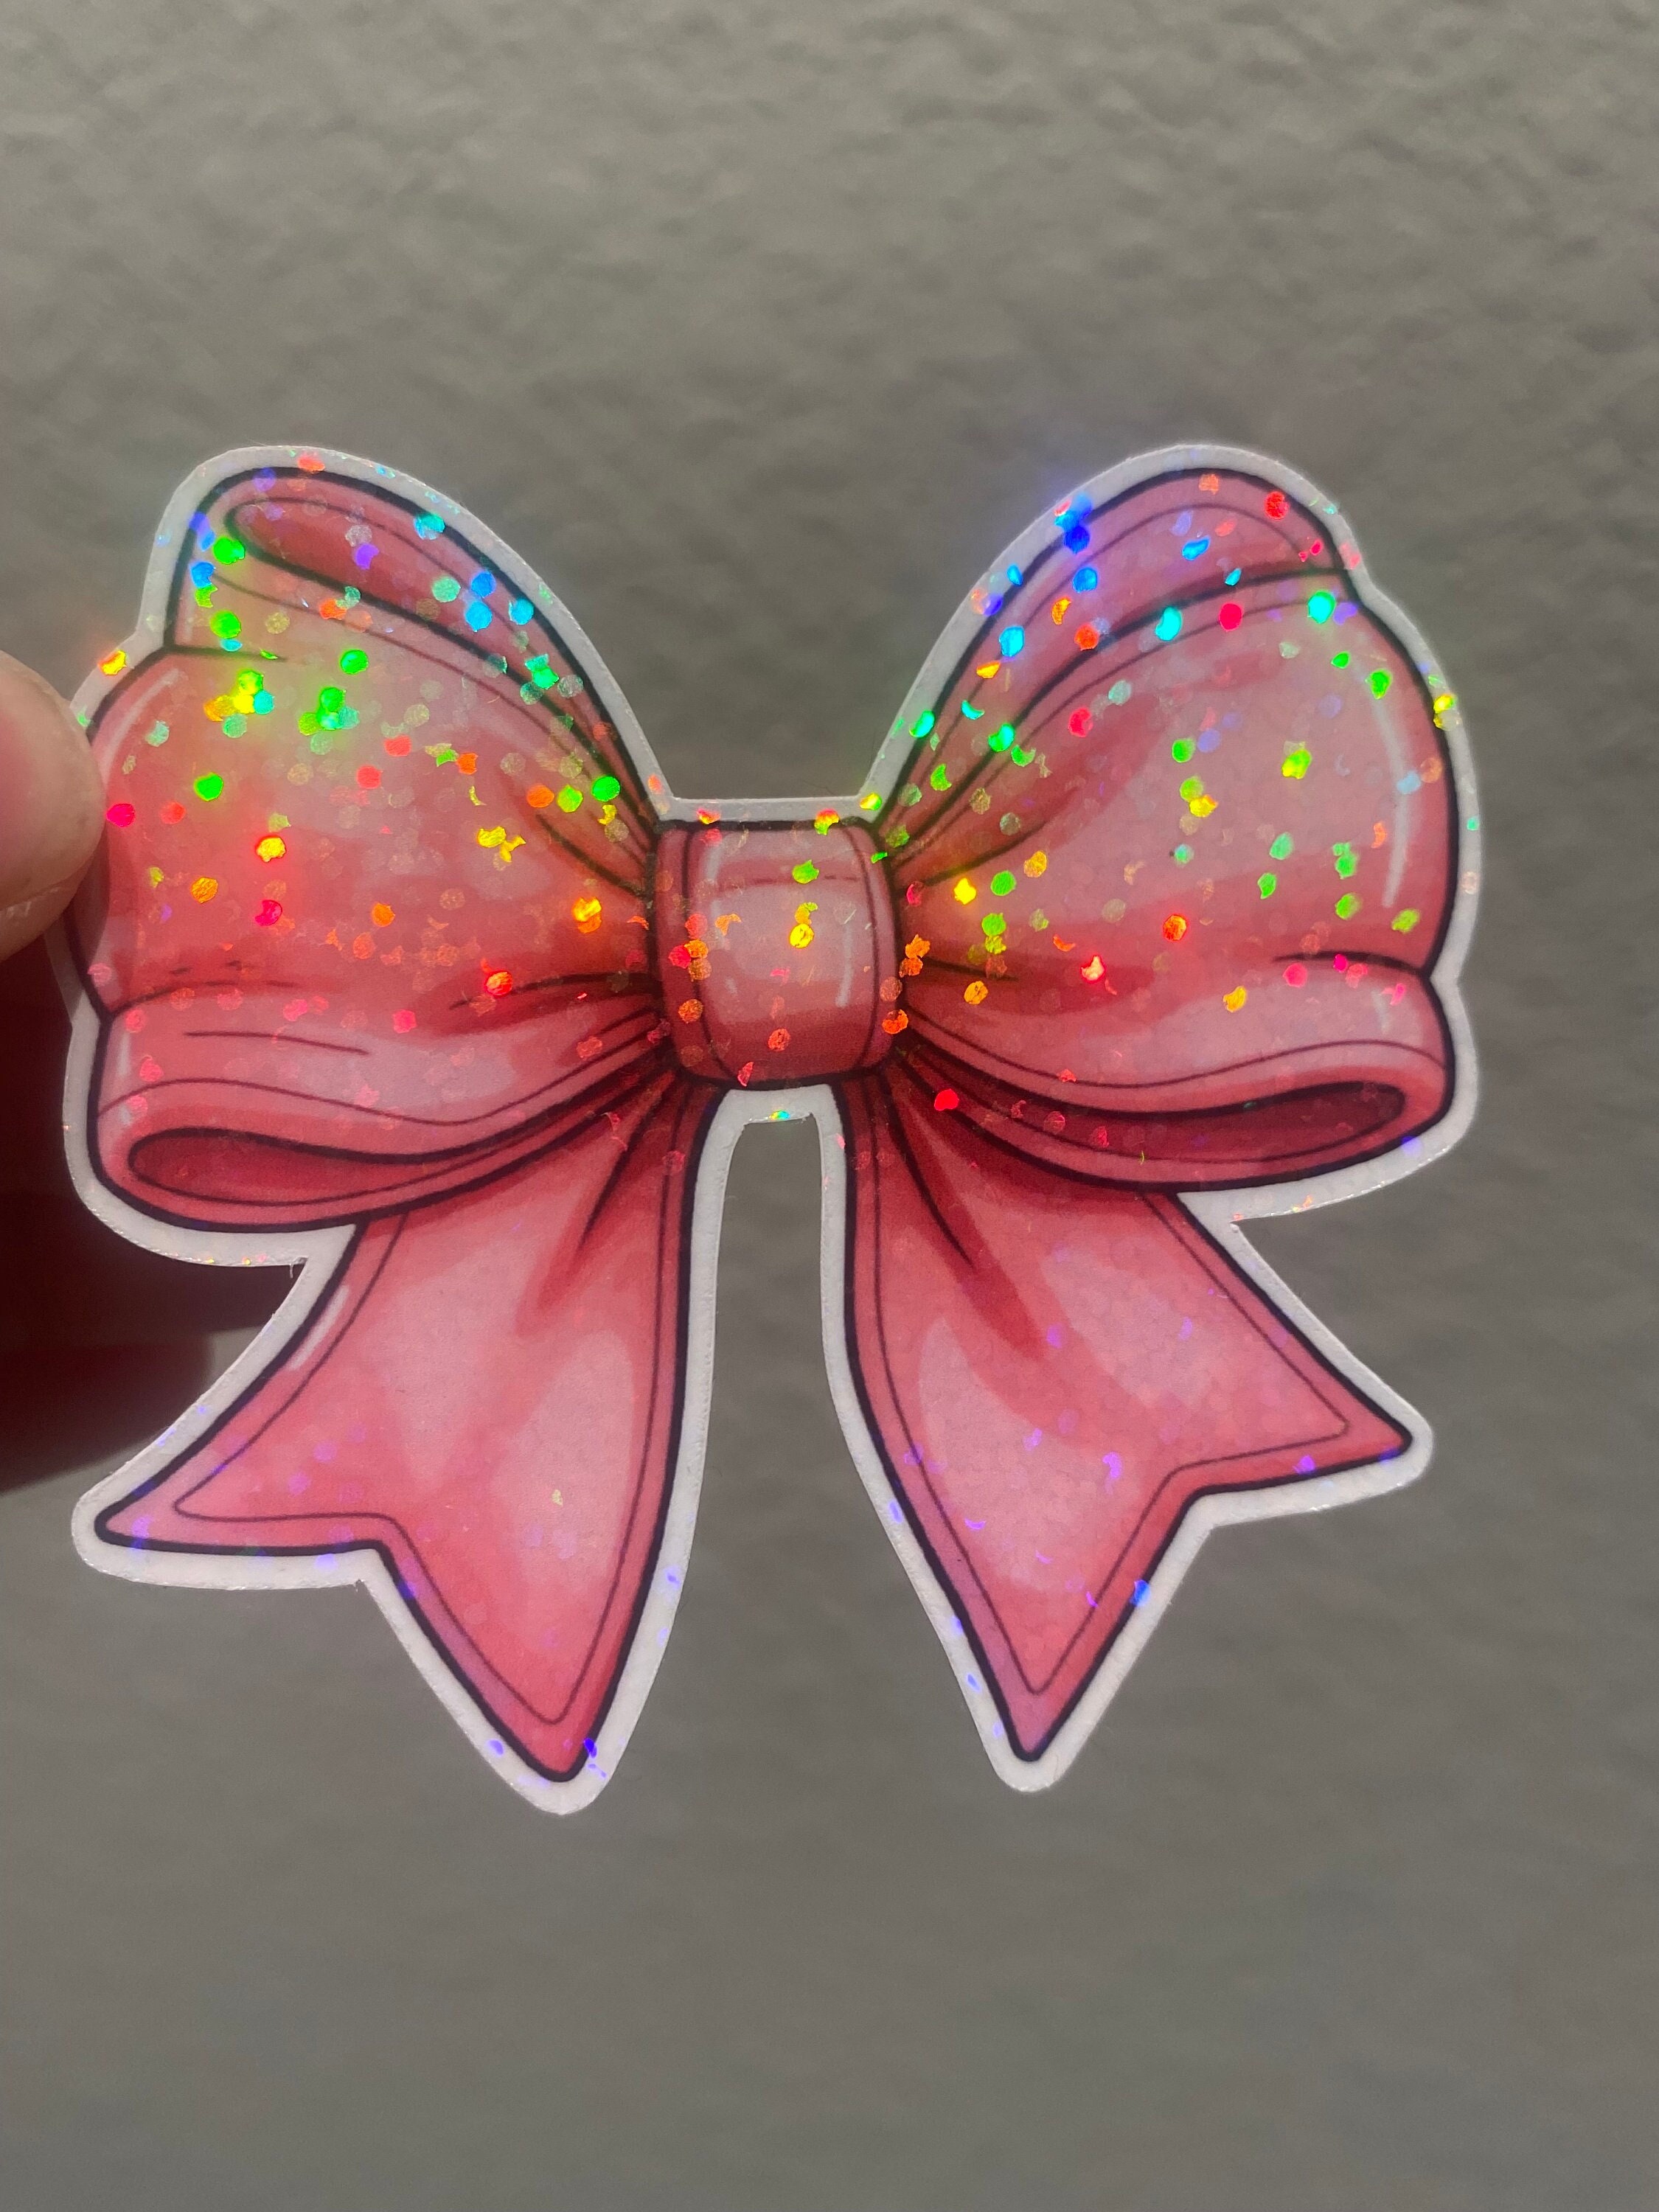 pink bow sticker flake 1.25x1.75